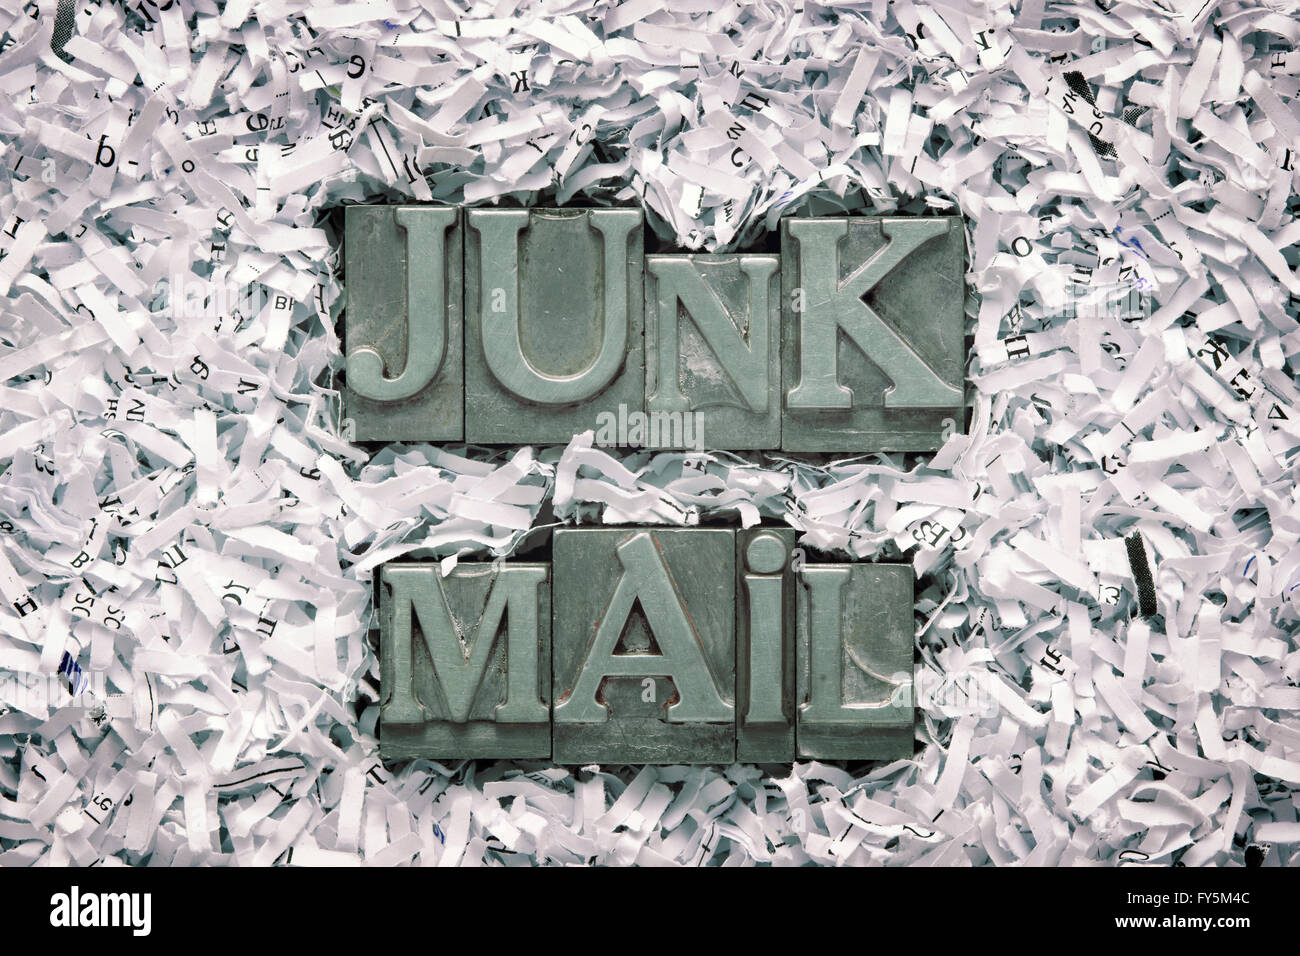 junk mail phrase made from metallic letterpress type inside of shredded paper heap Stock Photo